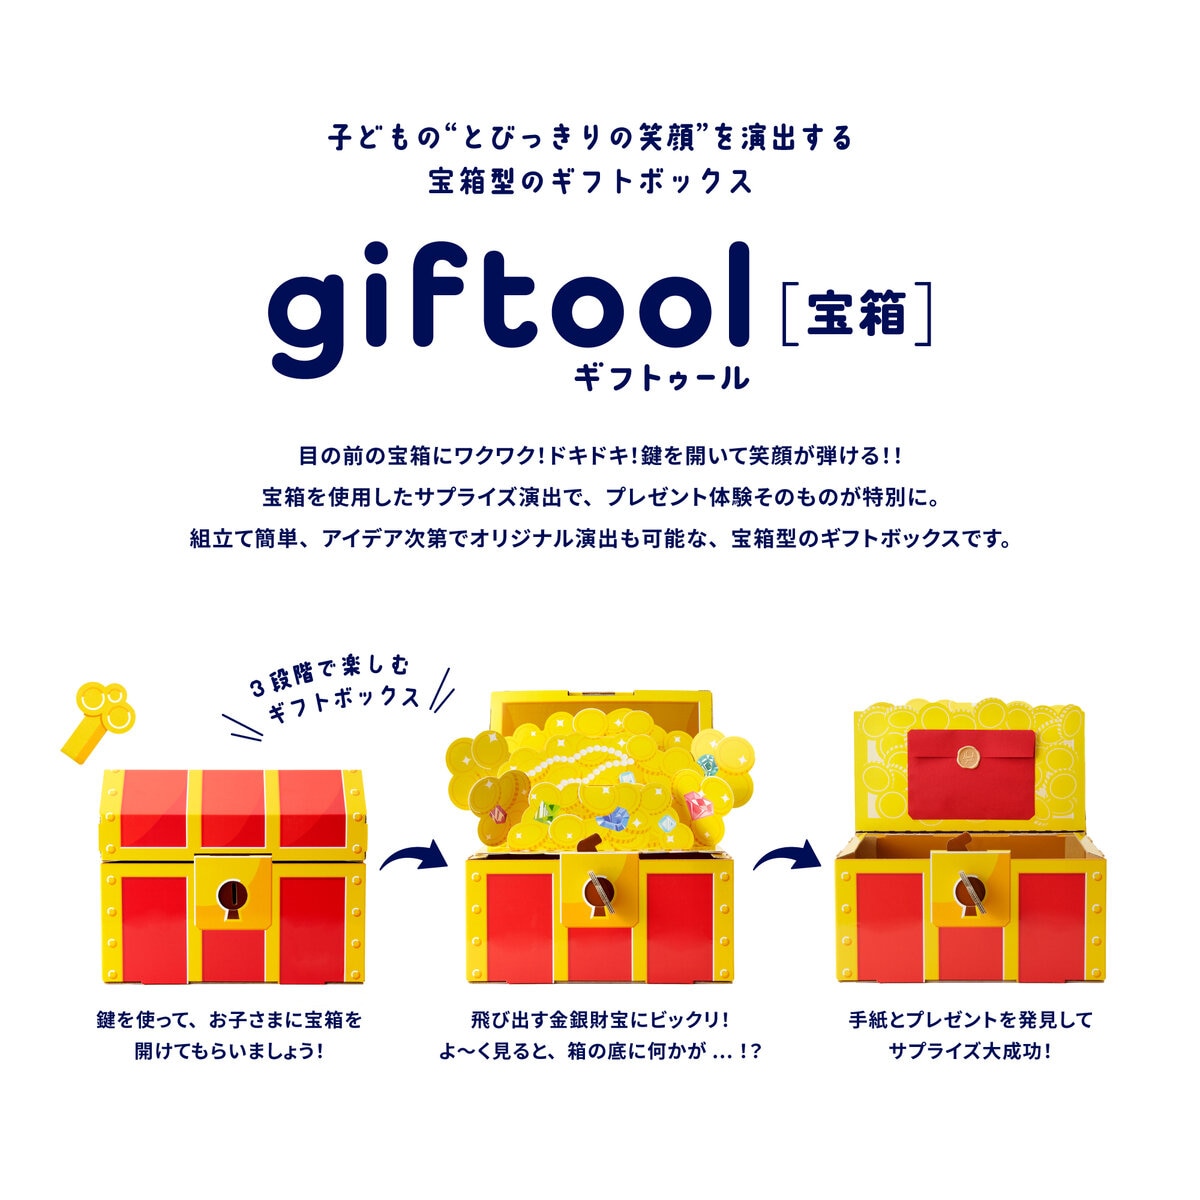 giftool 宝箱 金銀財宝 Sサイズ x 3